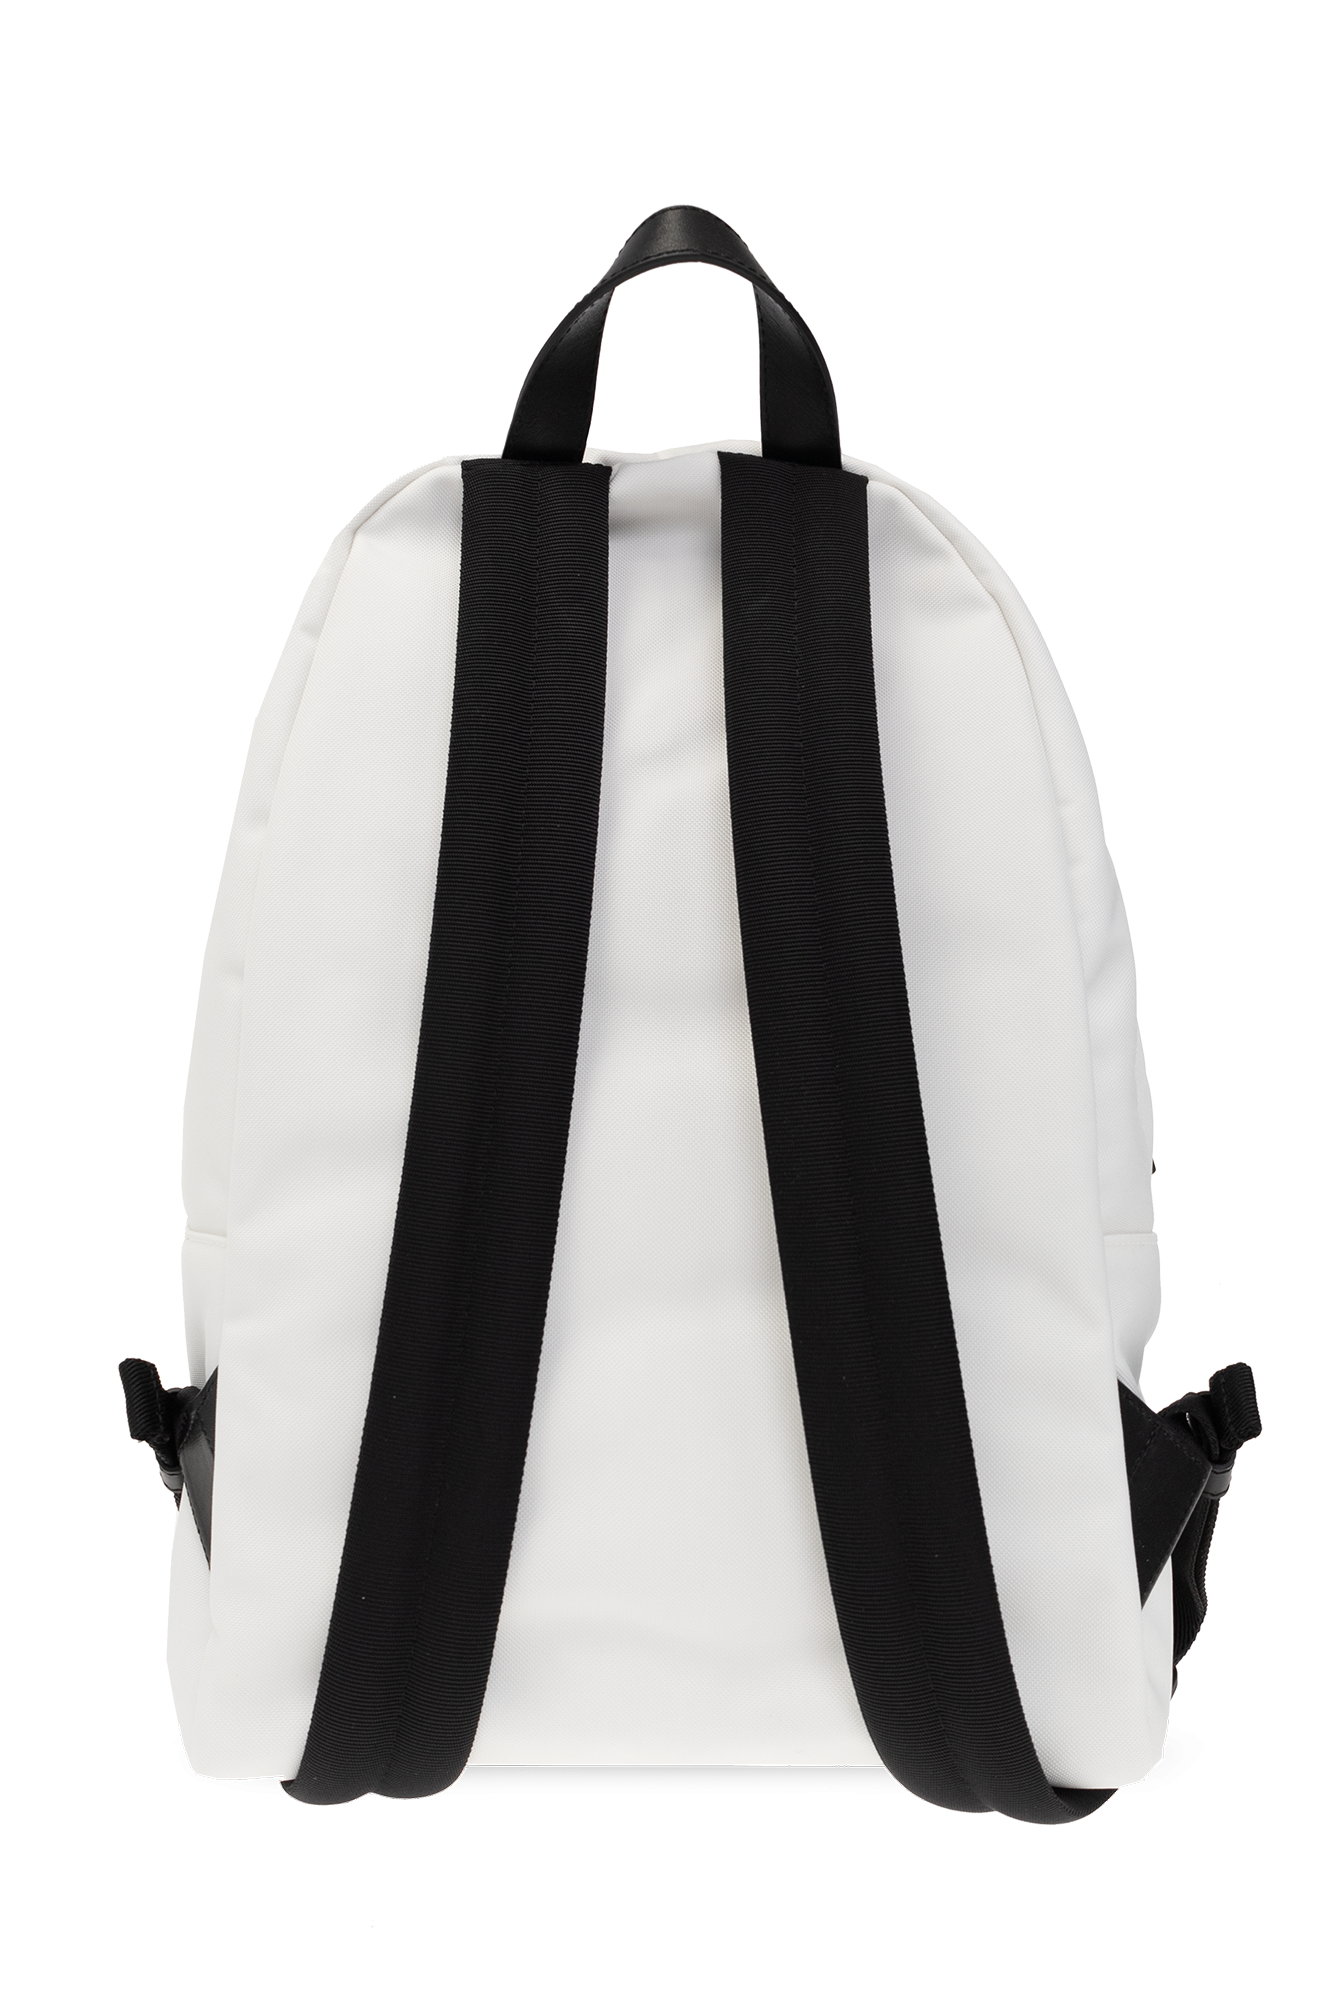 Moncler ‘Pierrick’ Bbuzz backpack